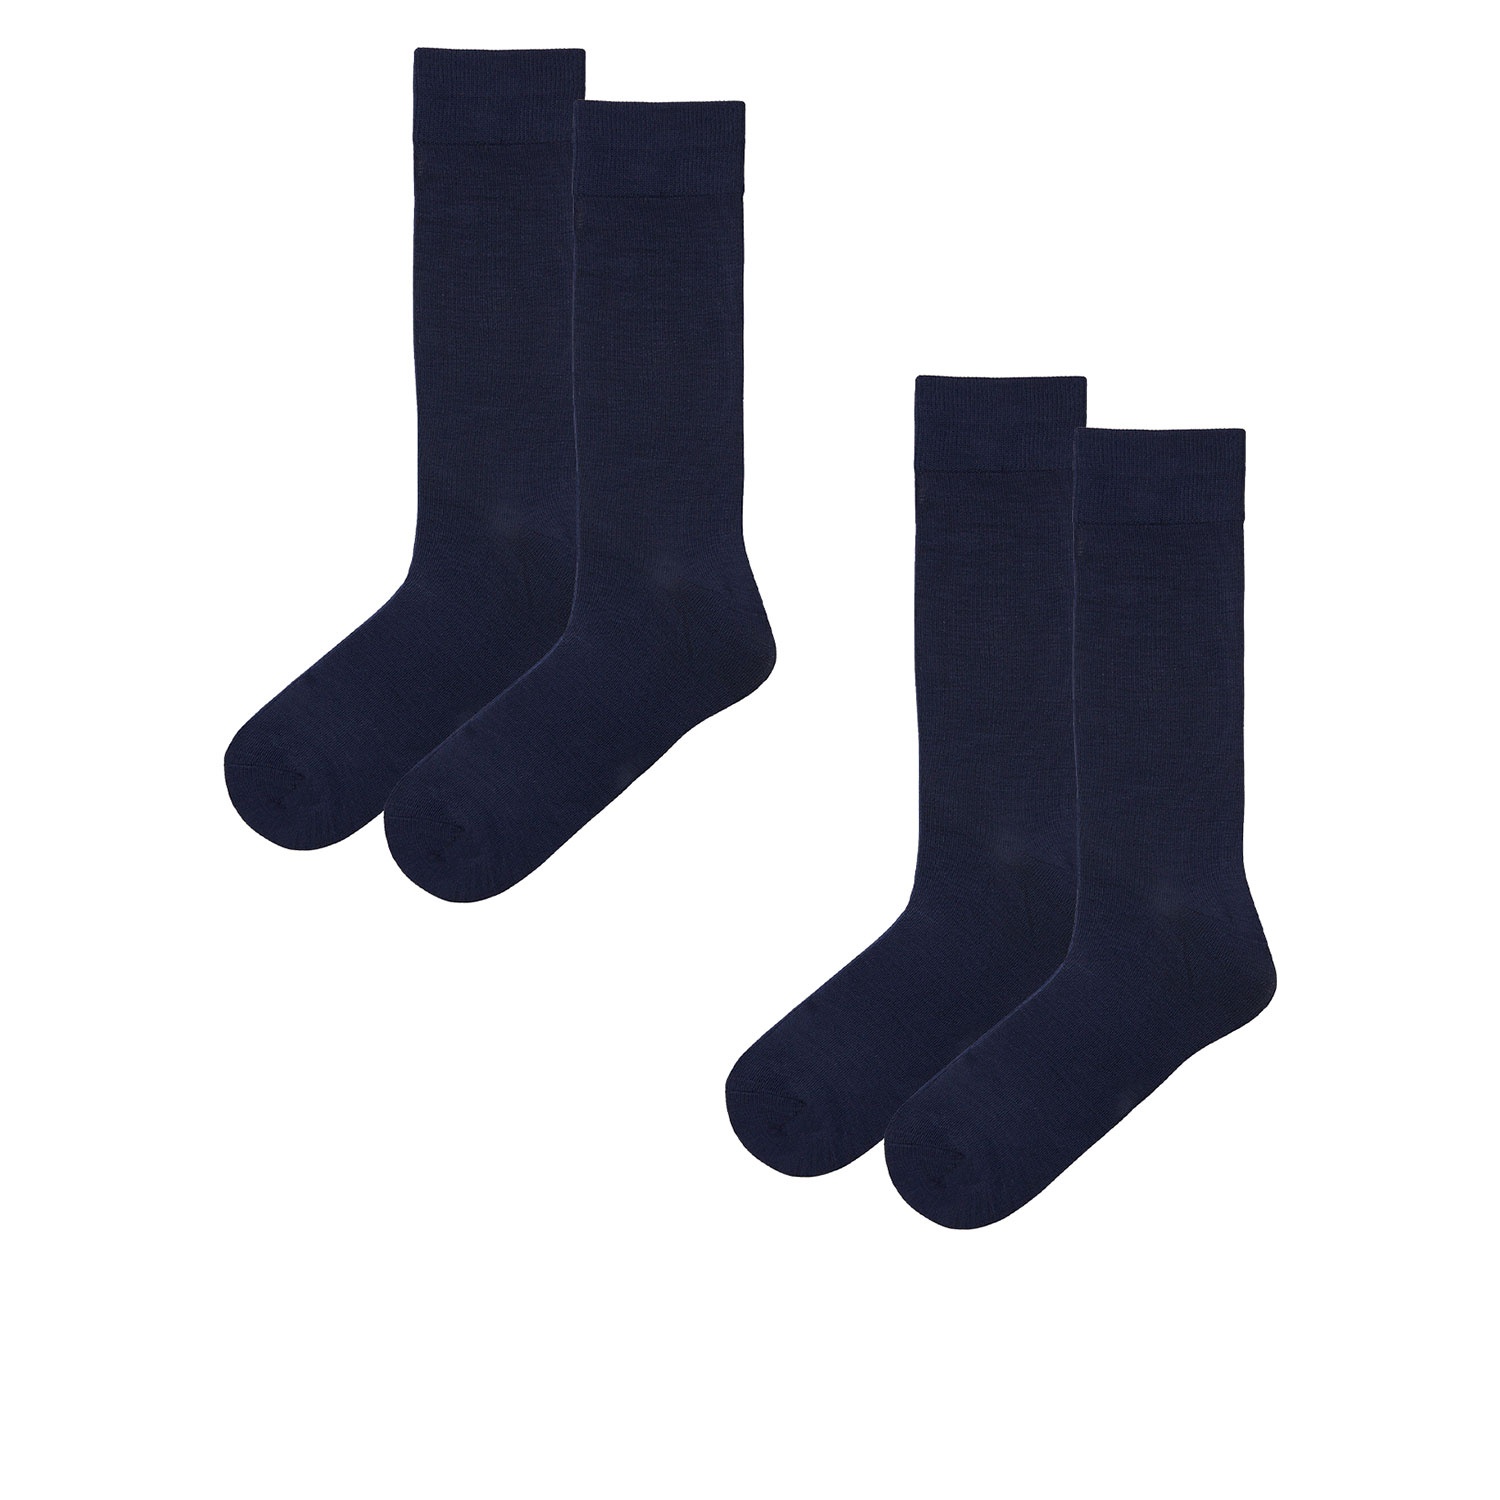 Damen und Herren Viskose-Socken, 2 Paar